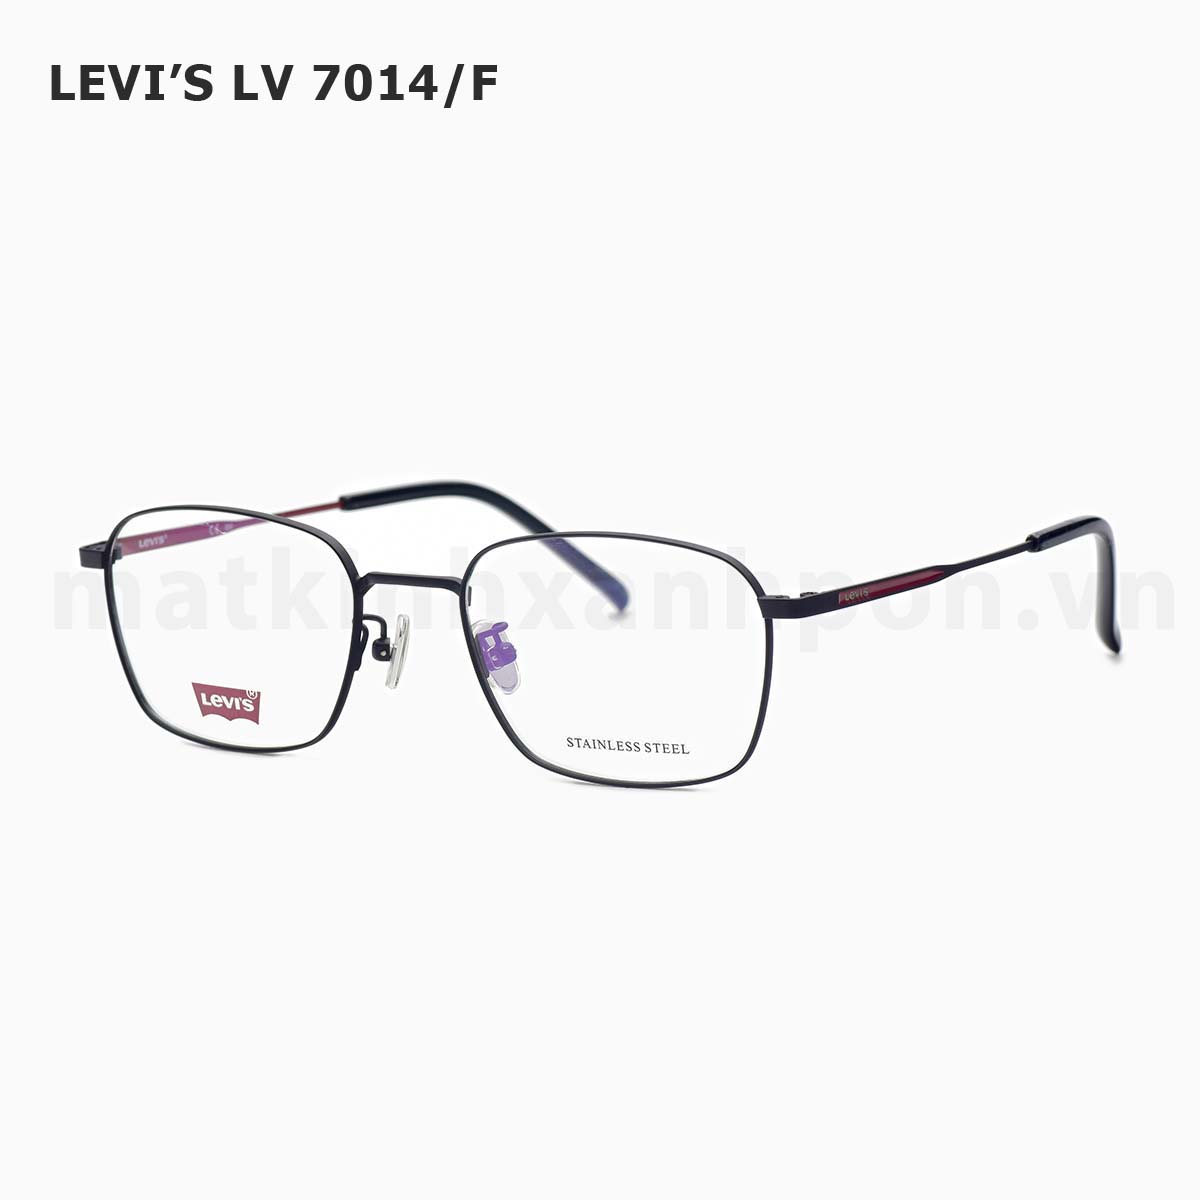 Levi’s LV 7014/F